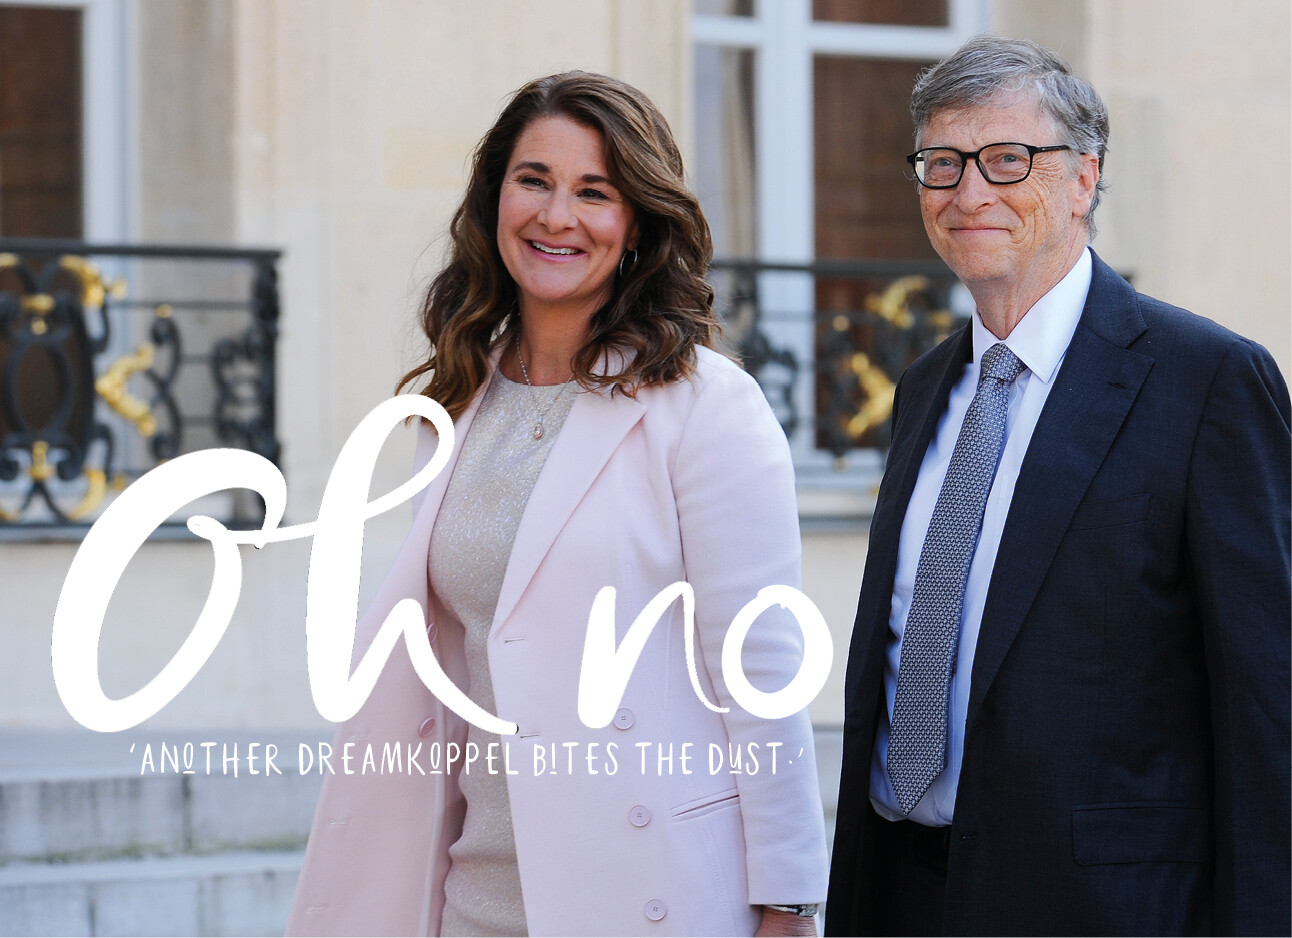 Melinda en Bill Gates gaan scheiden